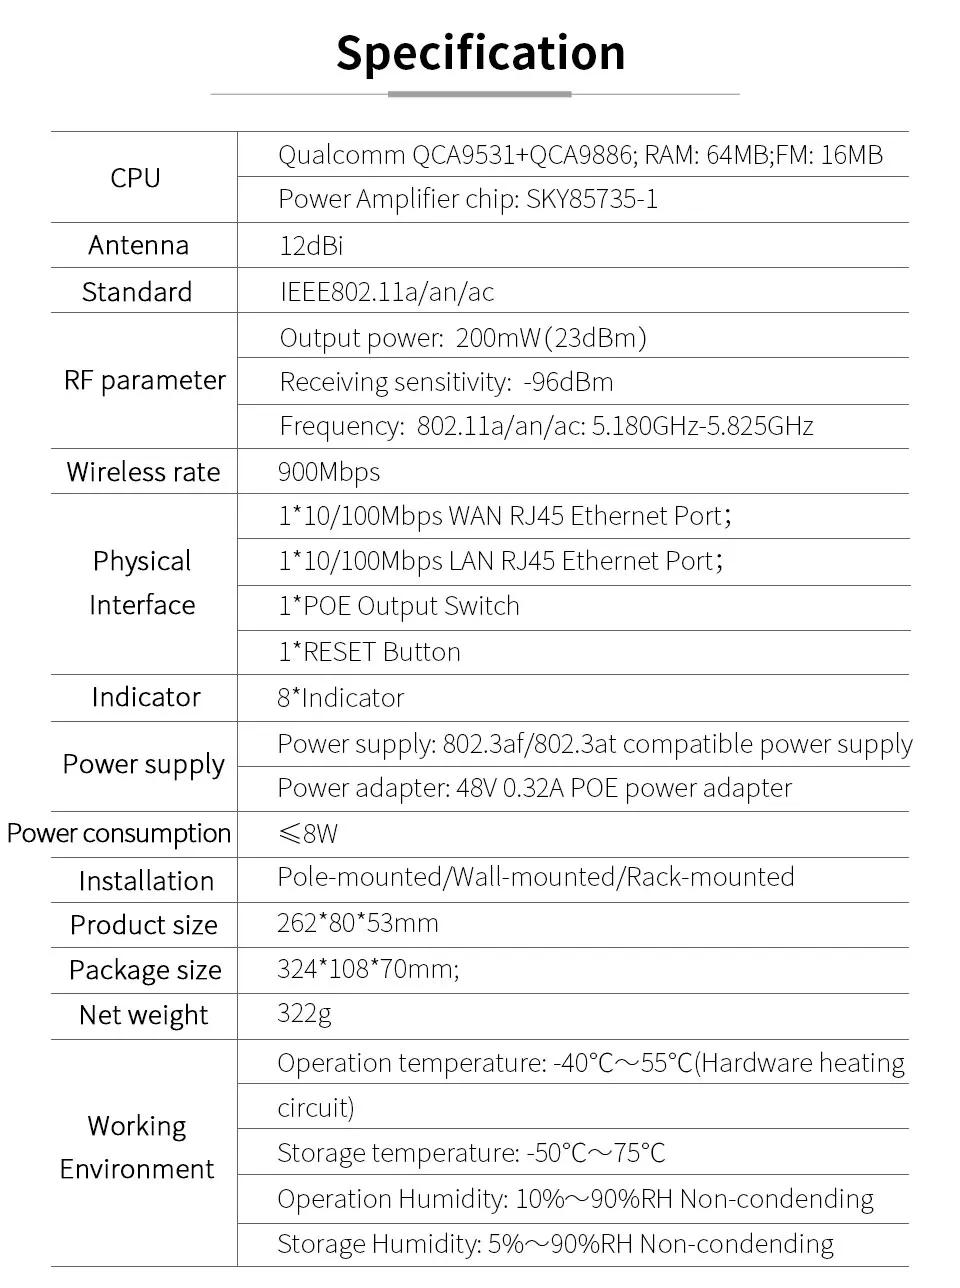 2 шт 900 Мбит/с 5,8 ГГц открытый беспроводной 5 км wifi CPE точка 12dBi Wi-Fi CPE COMFAST-E313AC